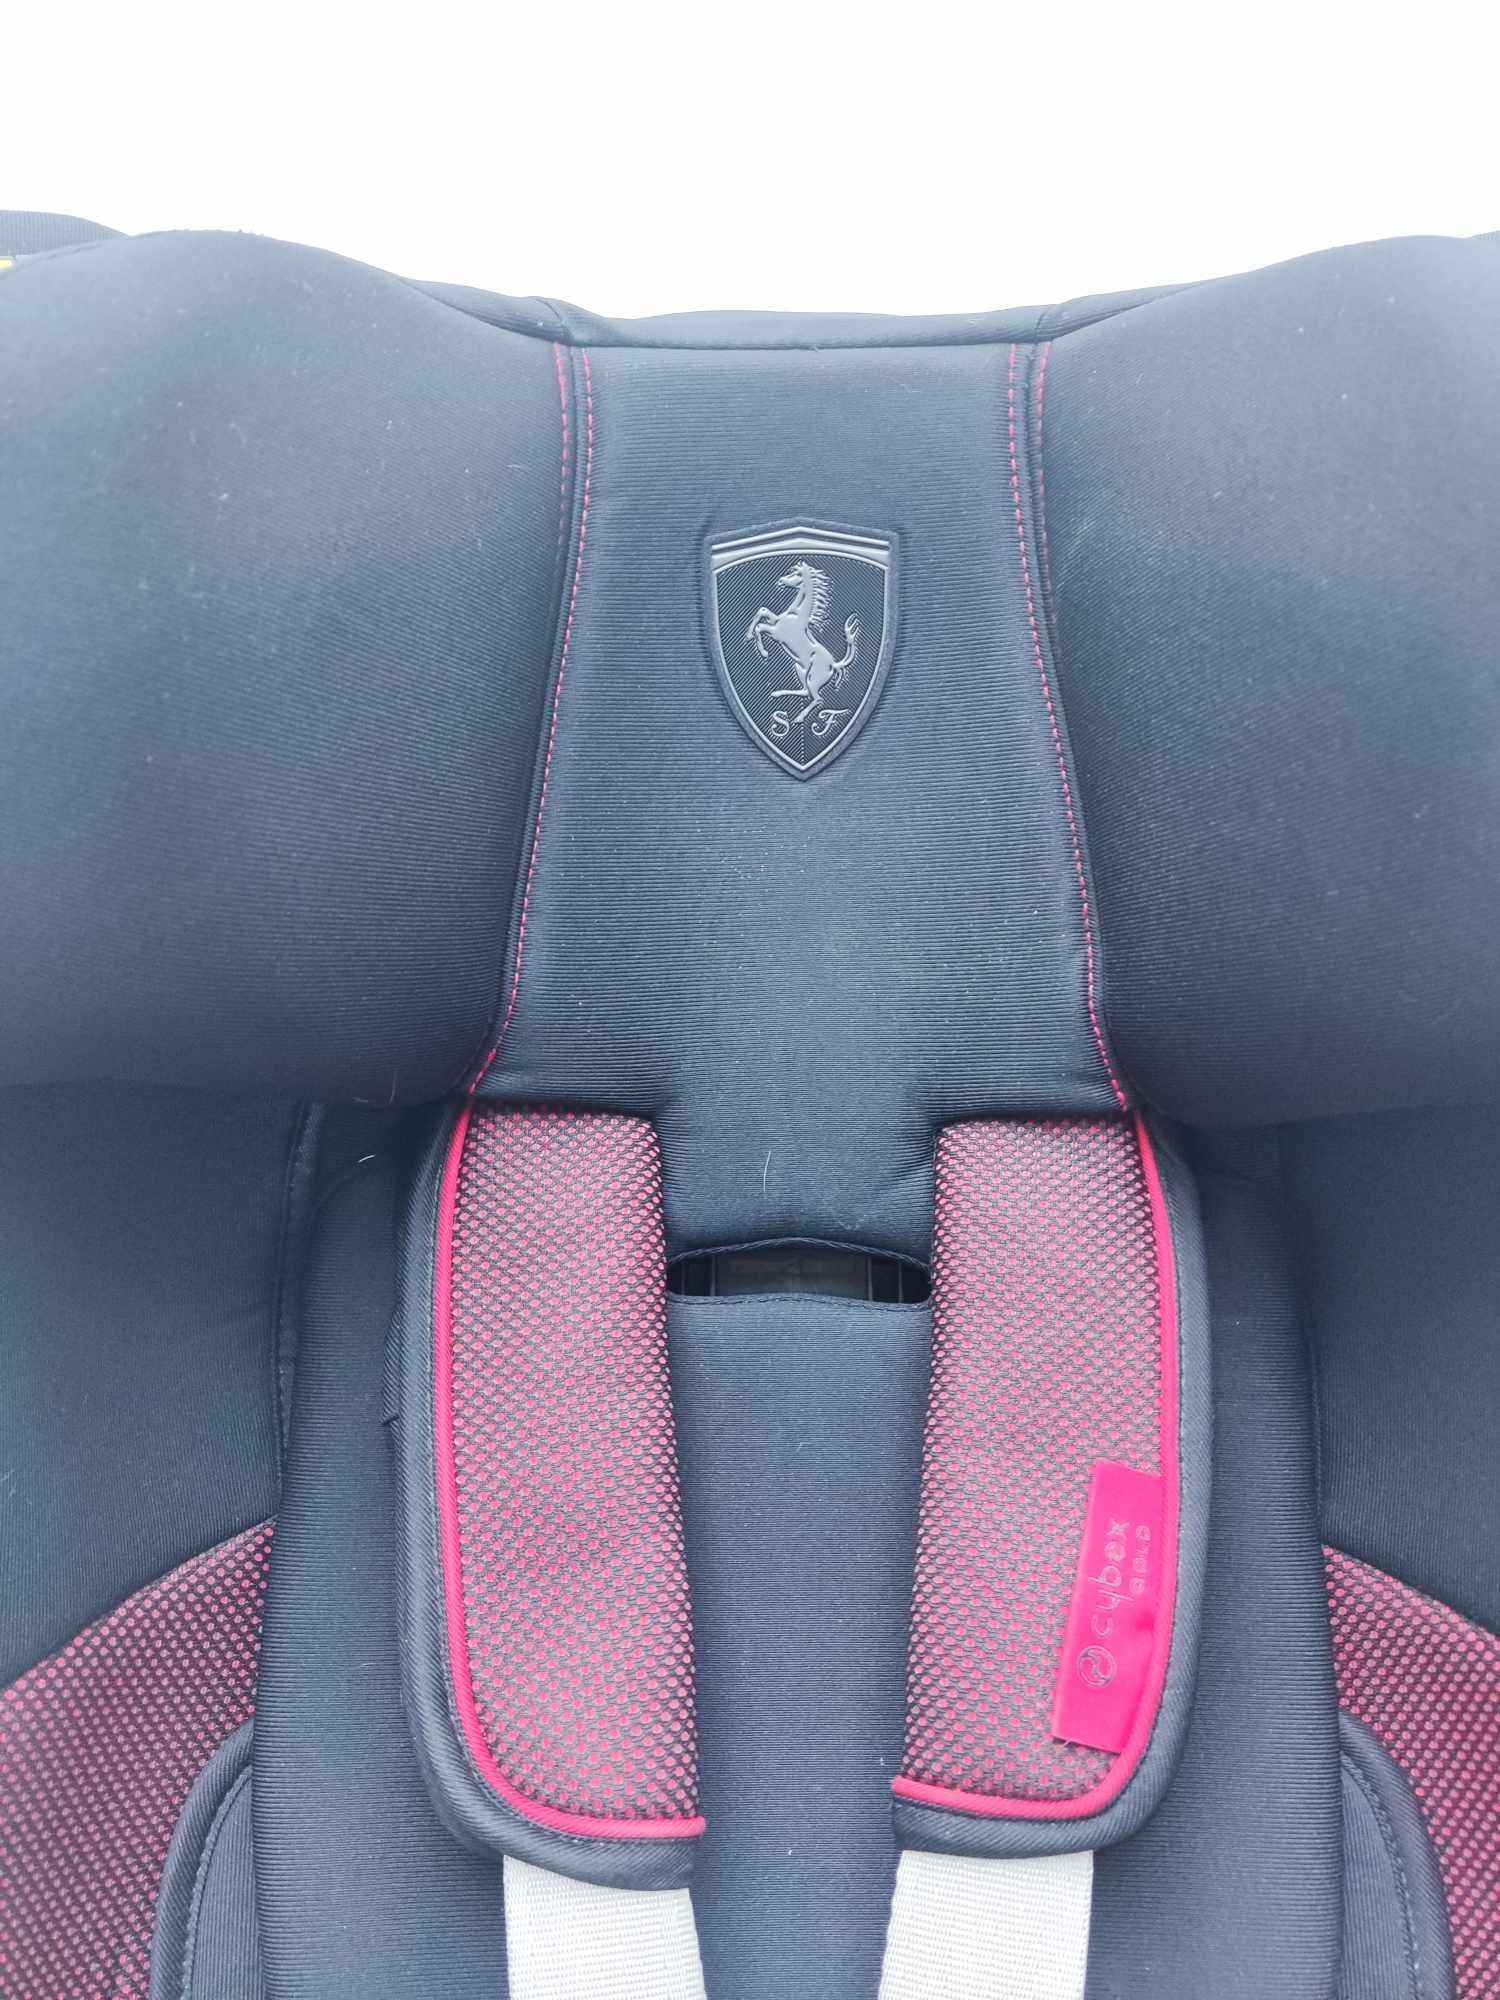 Cadeira Sirona da Cybex versão Ferrari